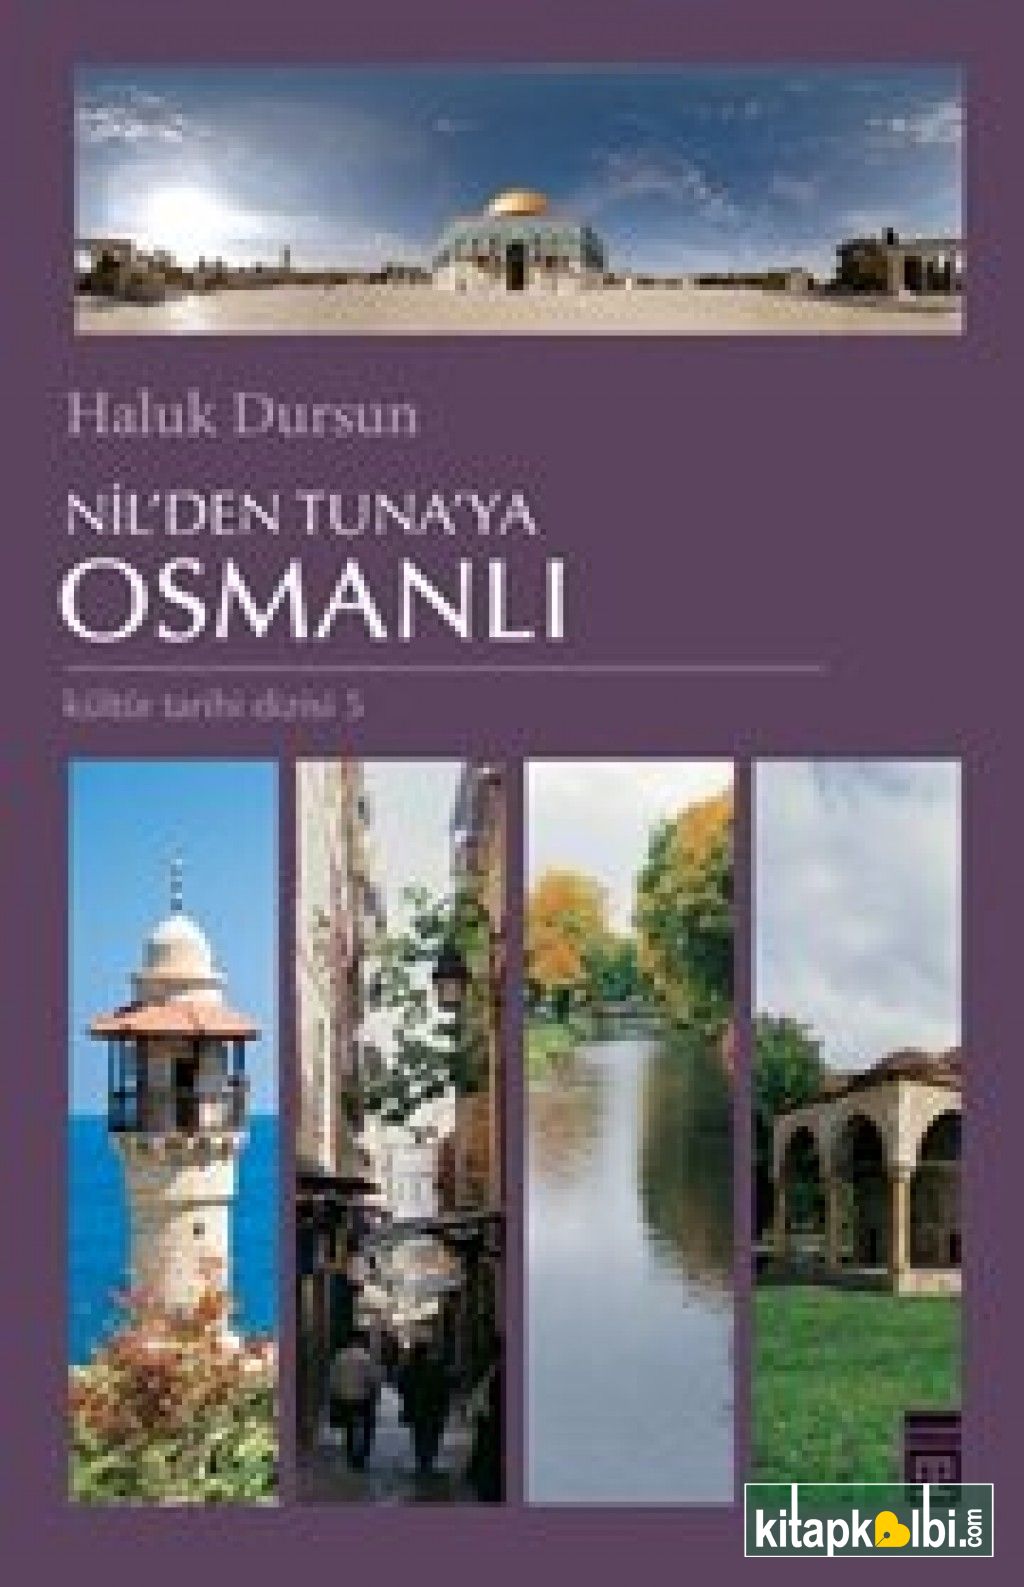 Nilden Tunaya Osmanlı